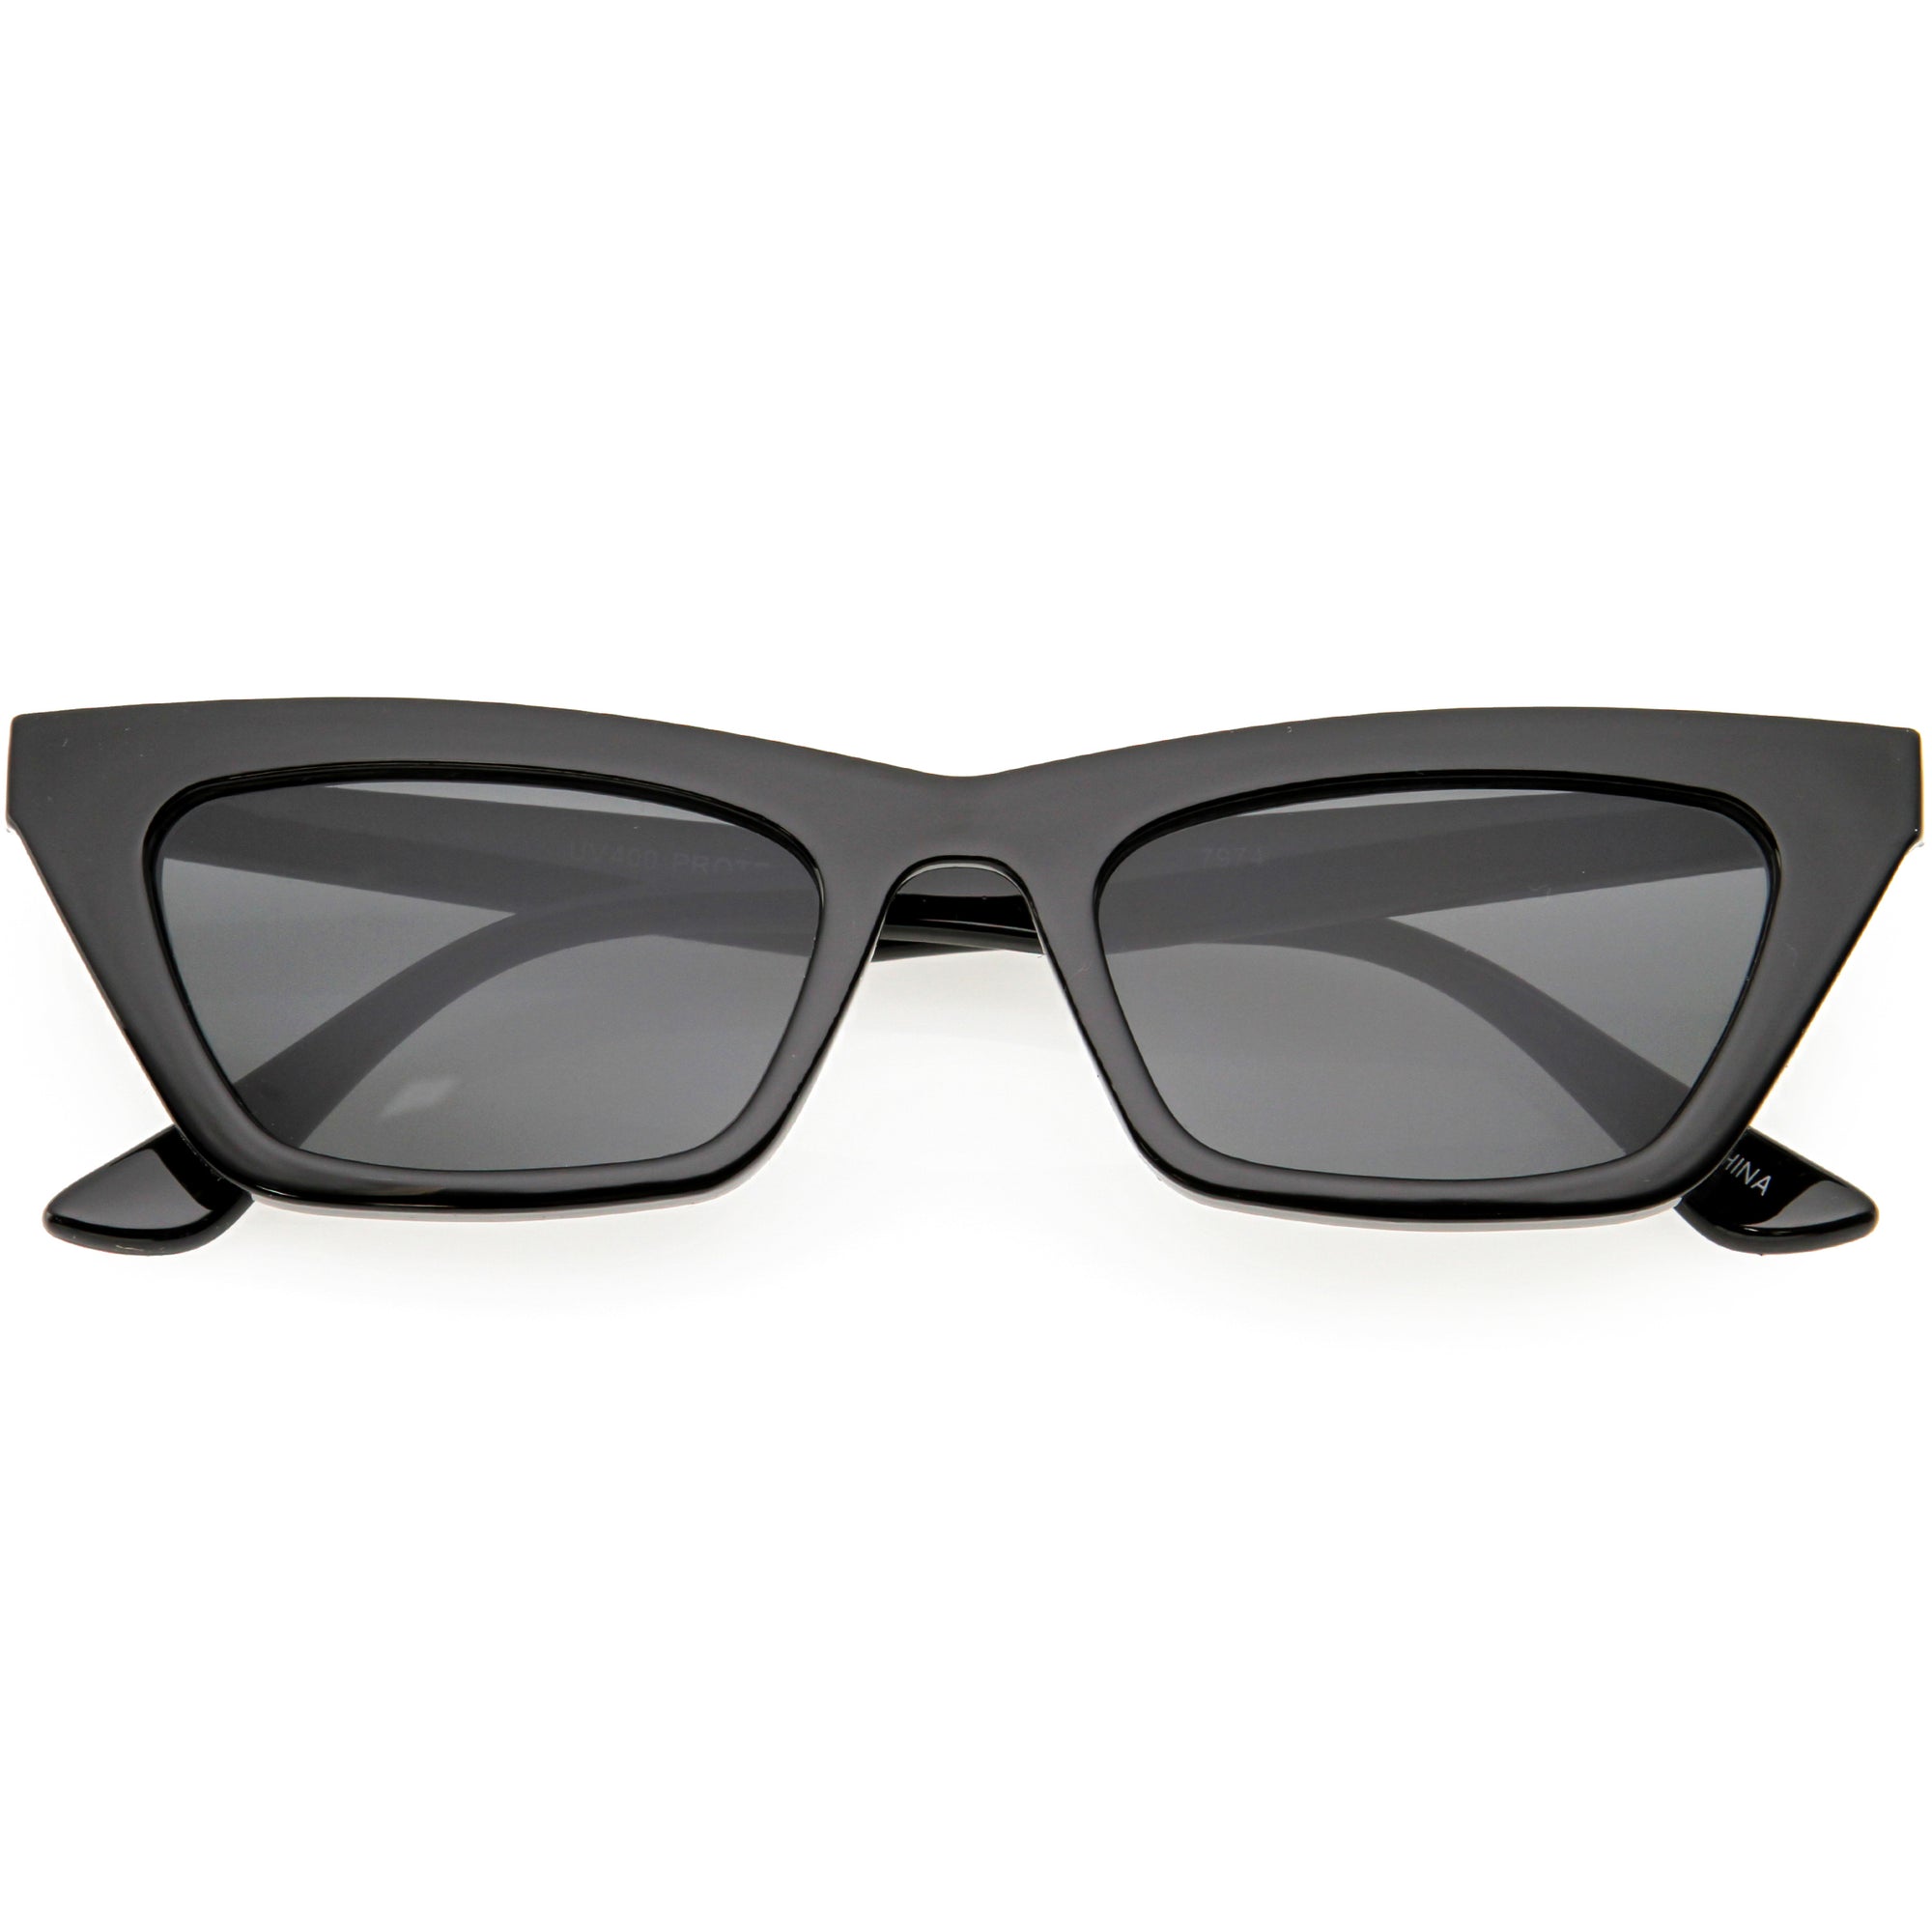 Mod Vintage Inspired Slim Pointed Cat Eye Sunglasses D211